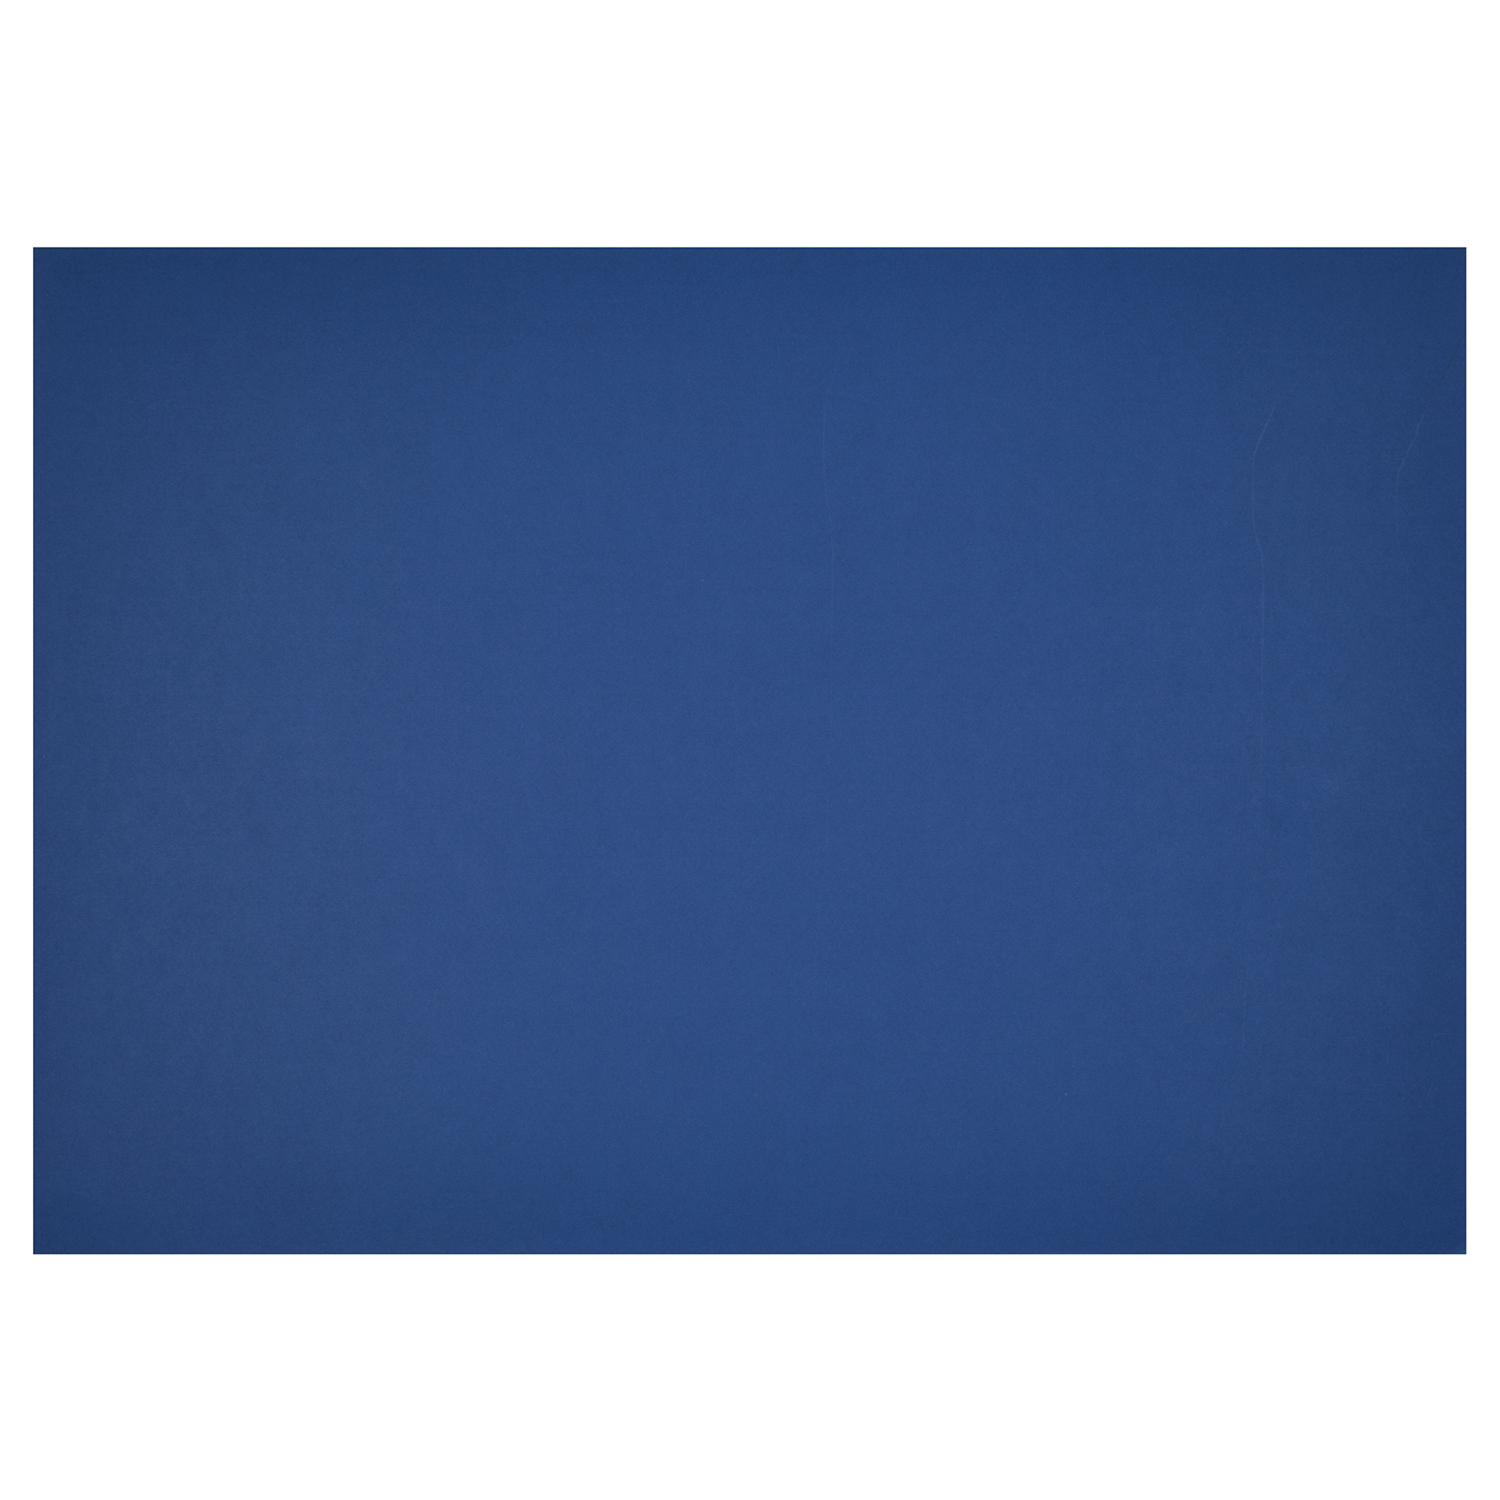 Mount Board - Oxford Blue Image